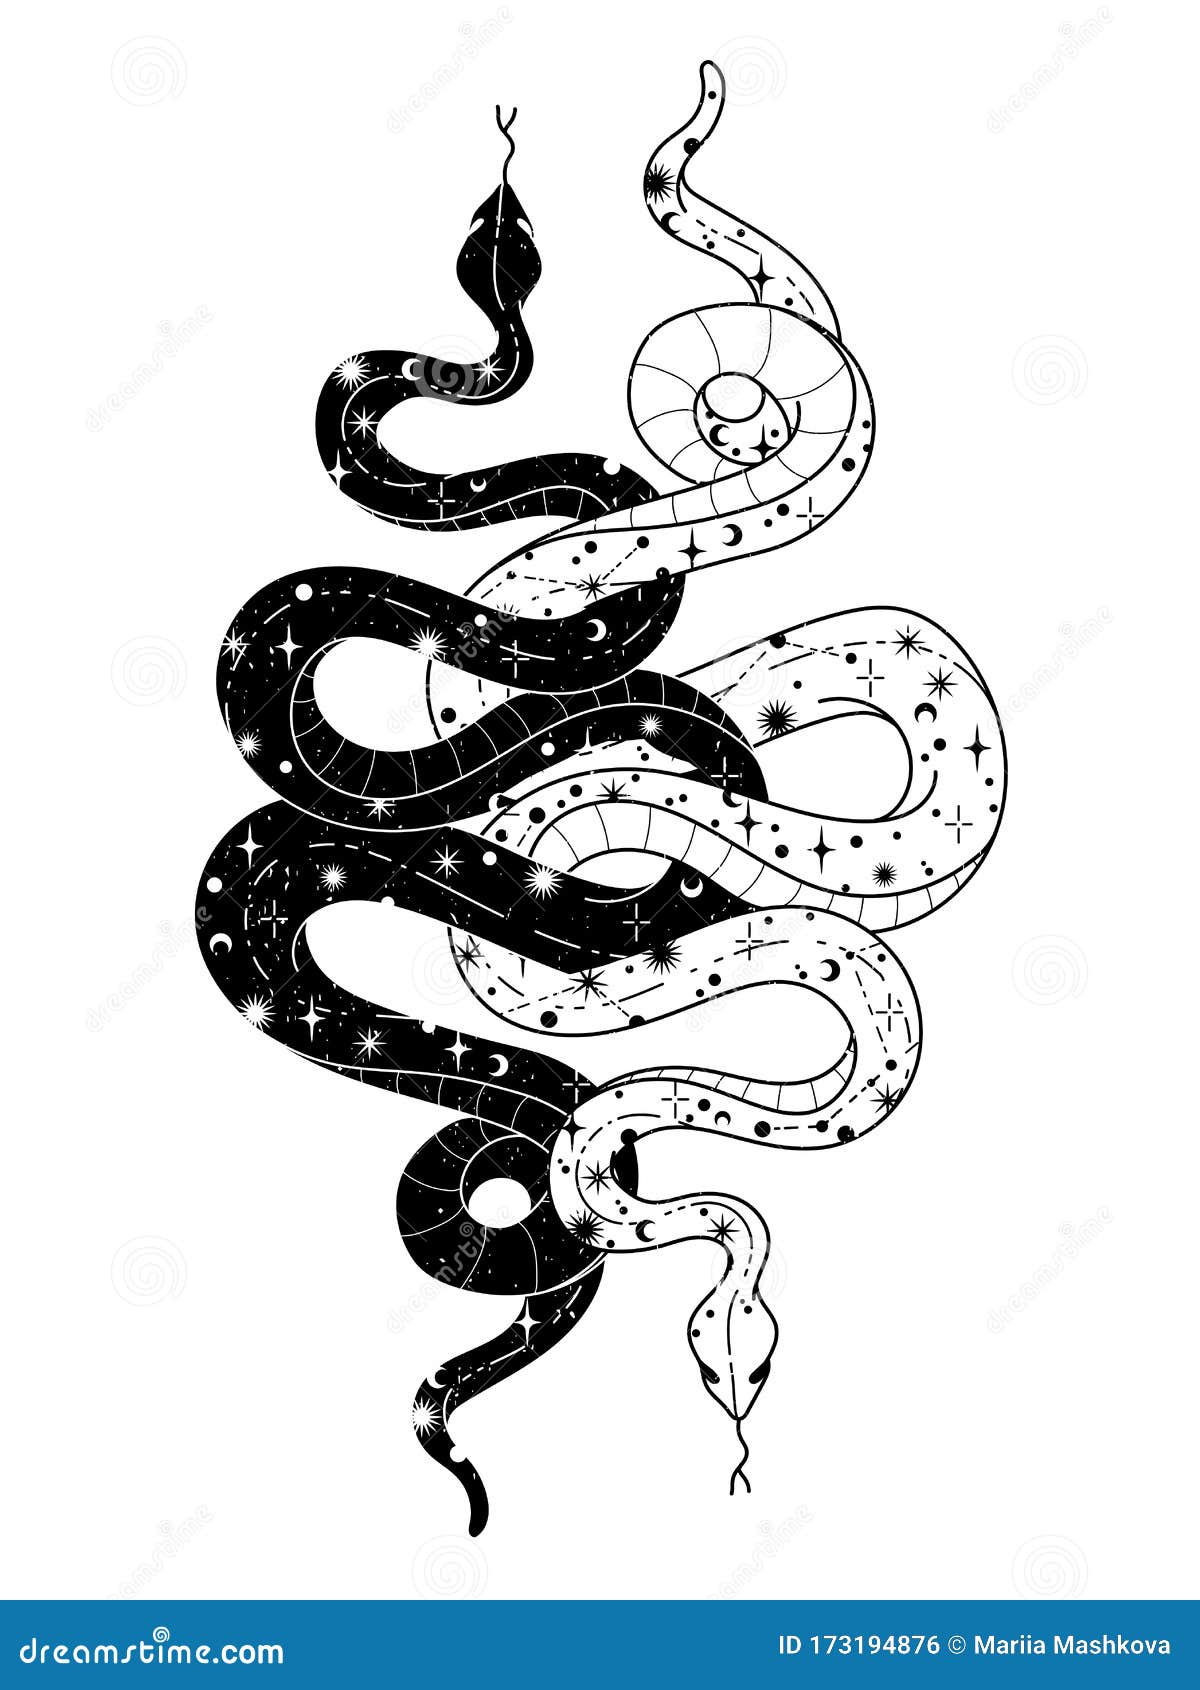 Syndicate Tattoo MHK  Celestial snake from outer space by joelsmithtattoo               kansastattoos kansasartist kansas manhattanks  emporiaks topeka lawrence junctioncityks fortriley kansascity  wichita tattoo tattoos 